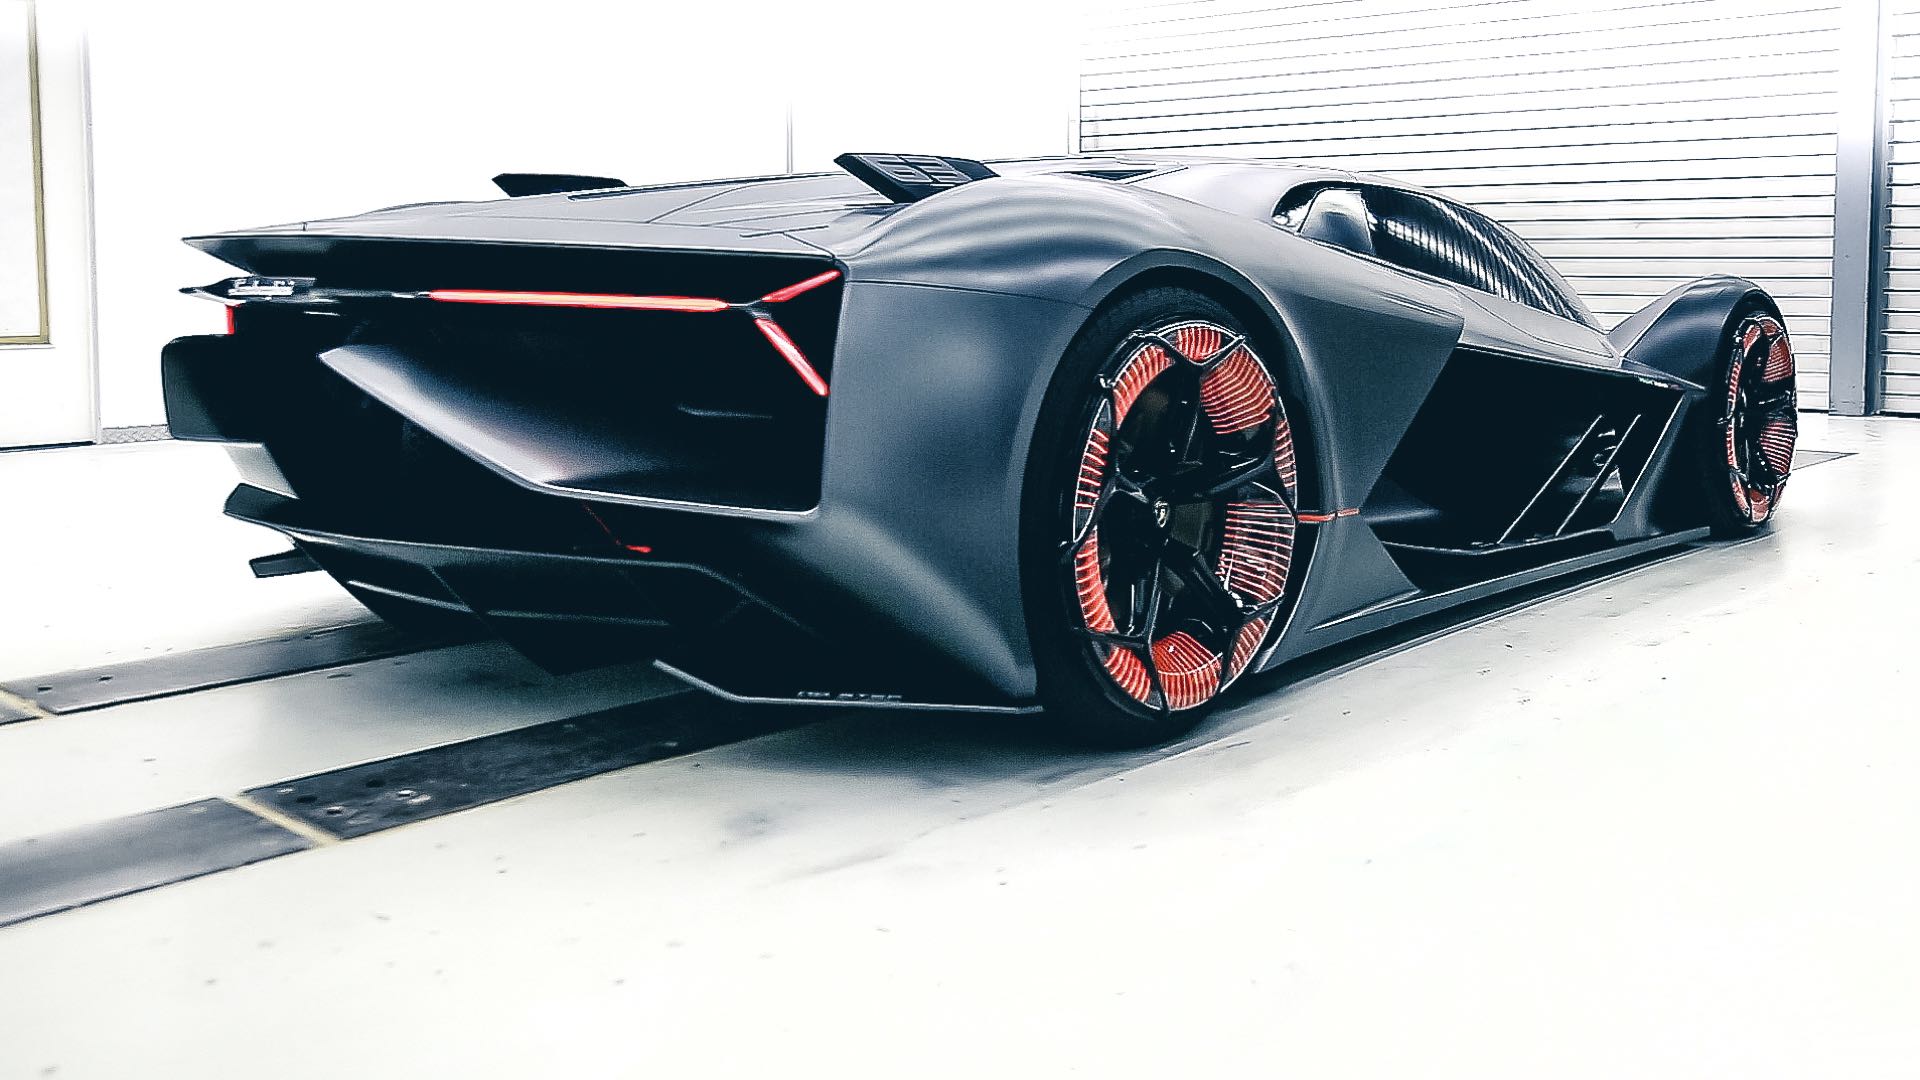 Lamborghini Trono is a Futuristic All-Electric Hypercar with a